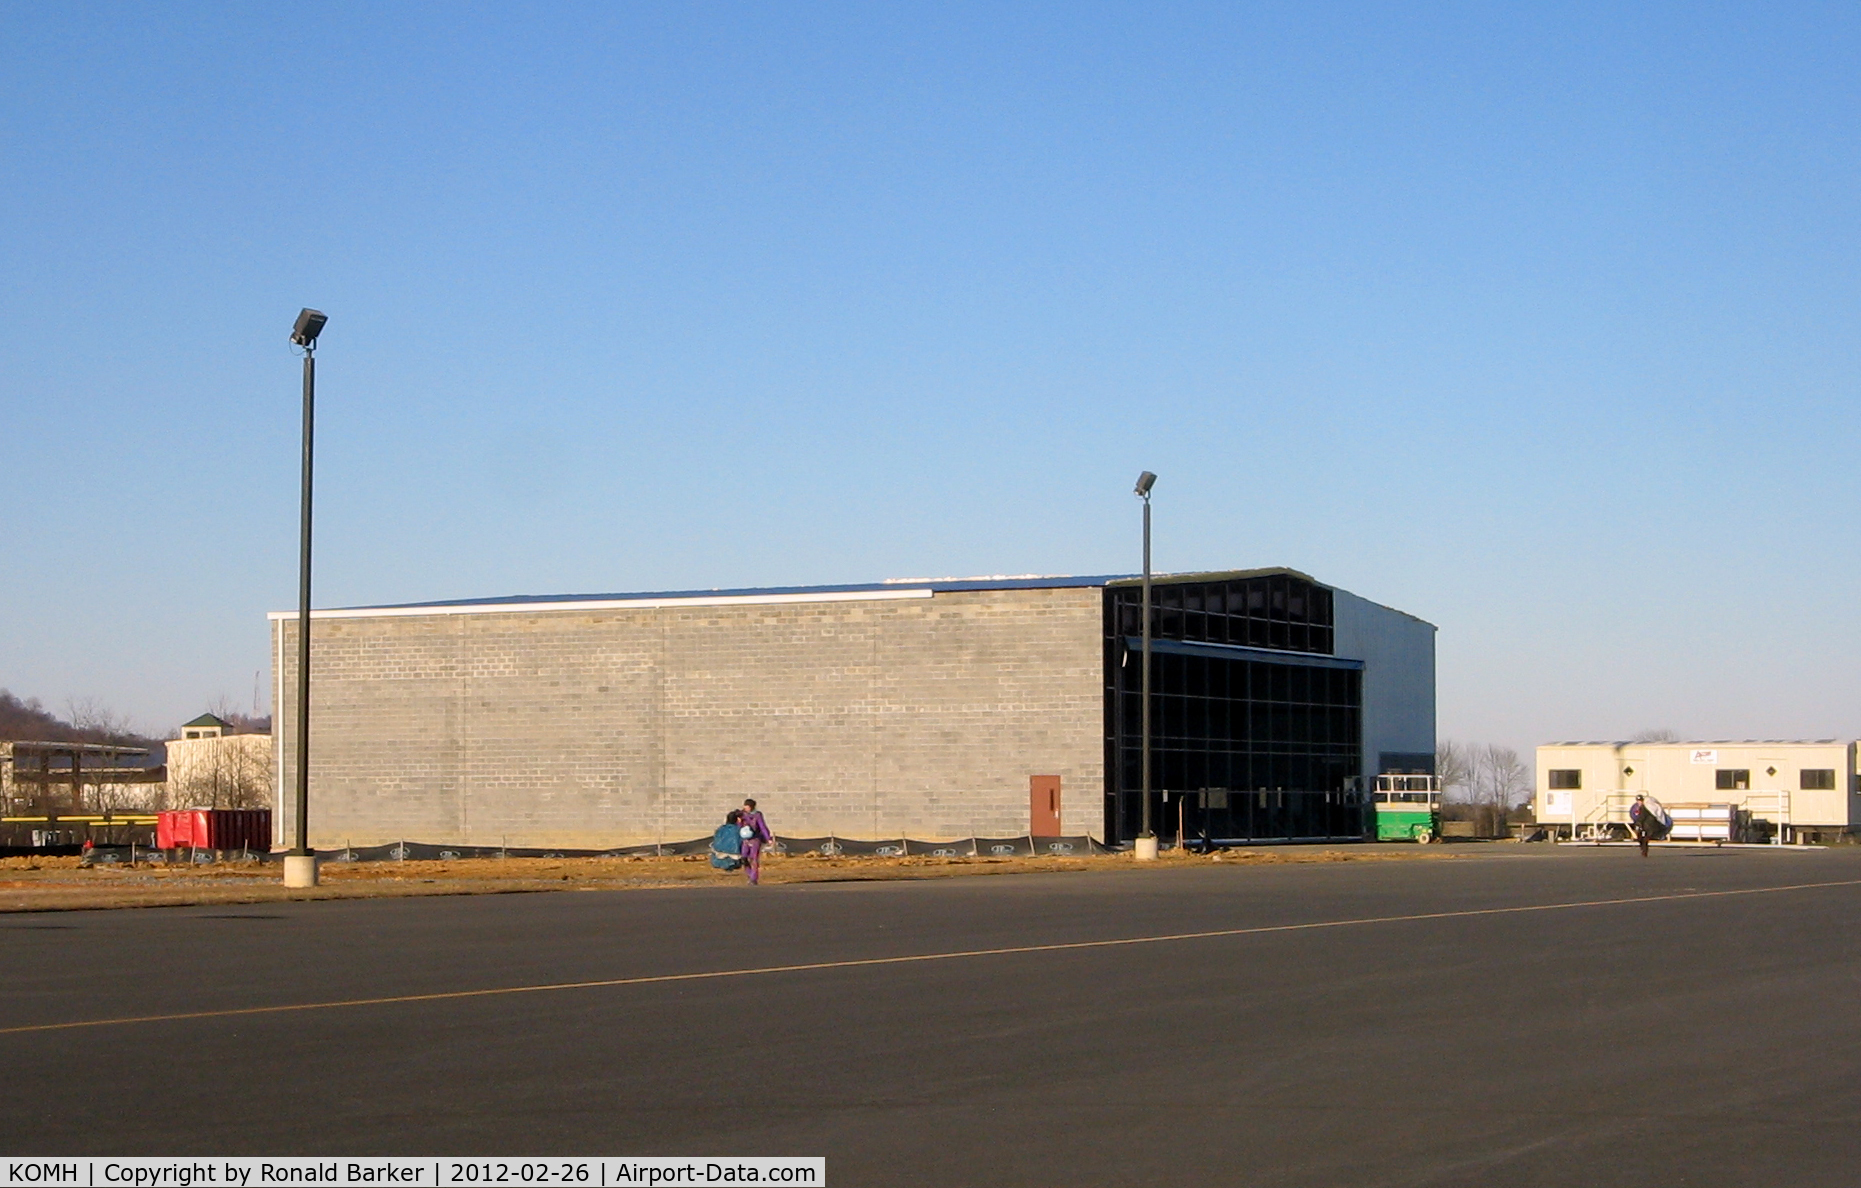 Orange County Airport (OMH) - New Sky Dive Orange building